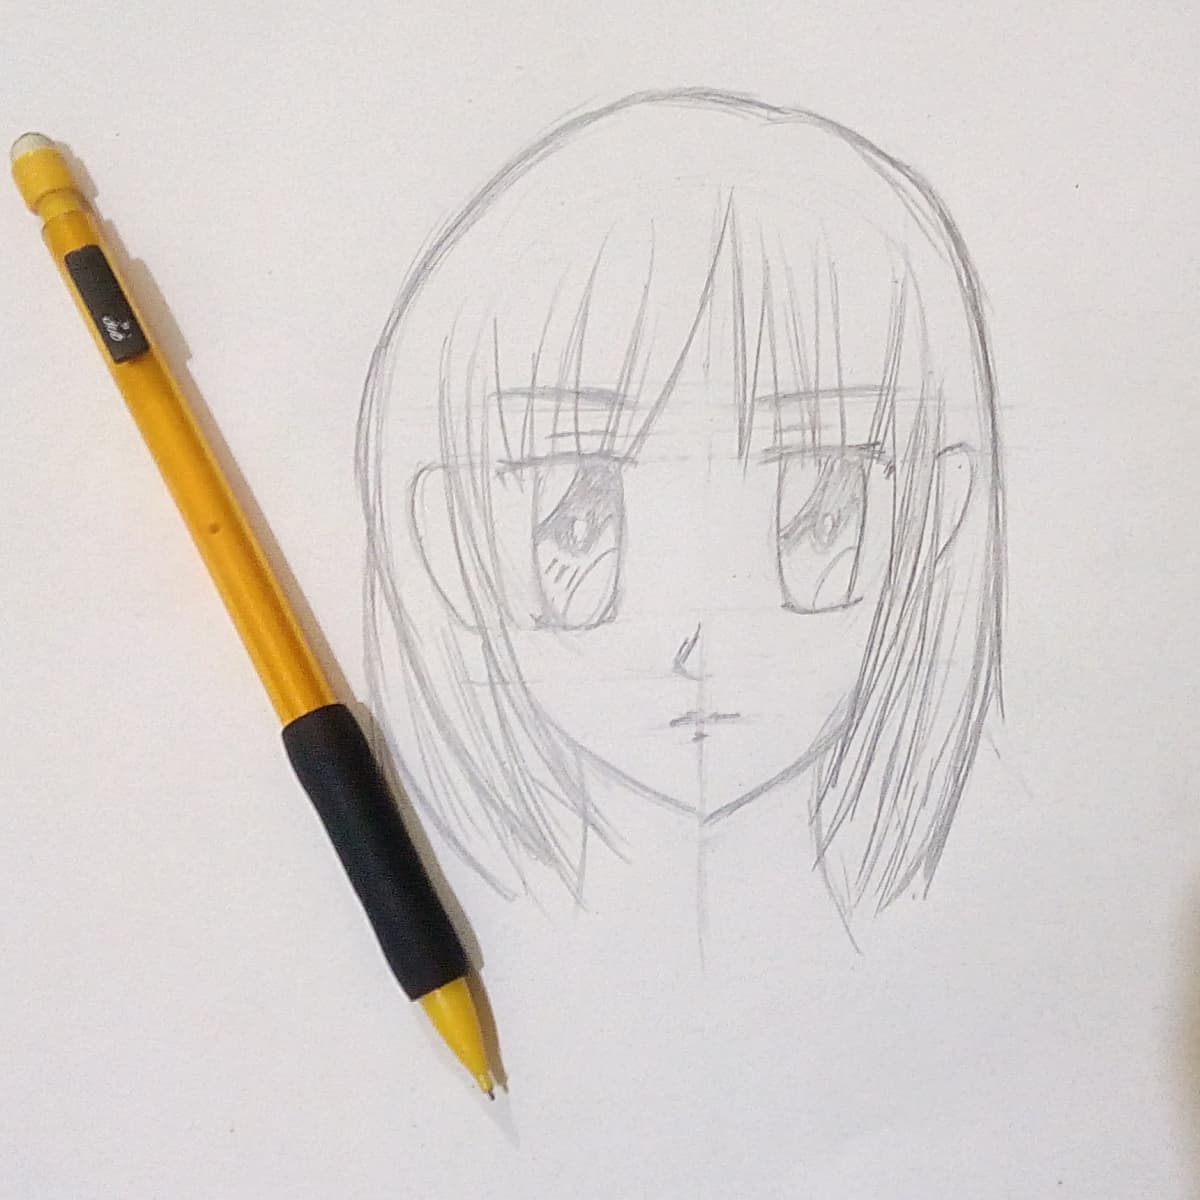 Pencil drawing girl